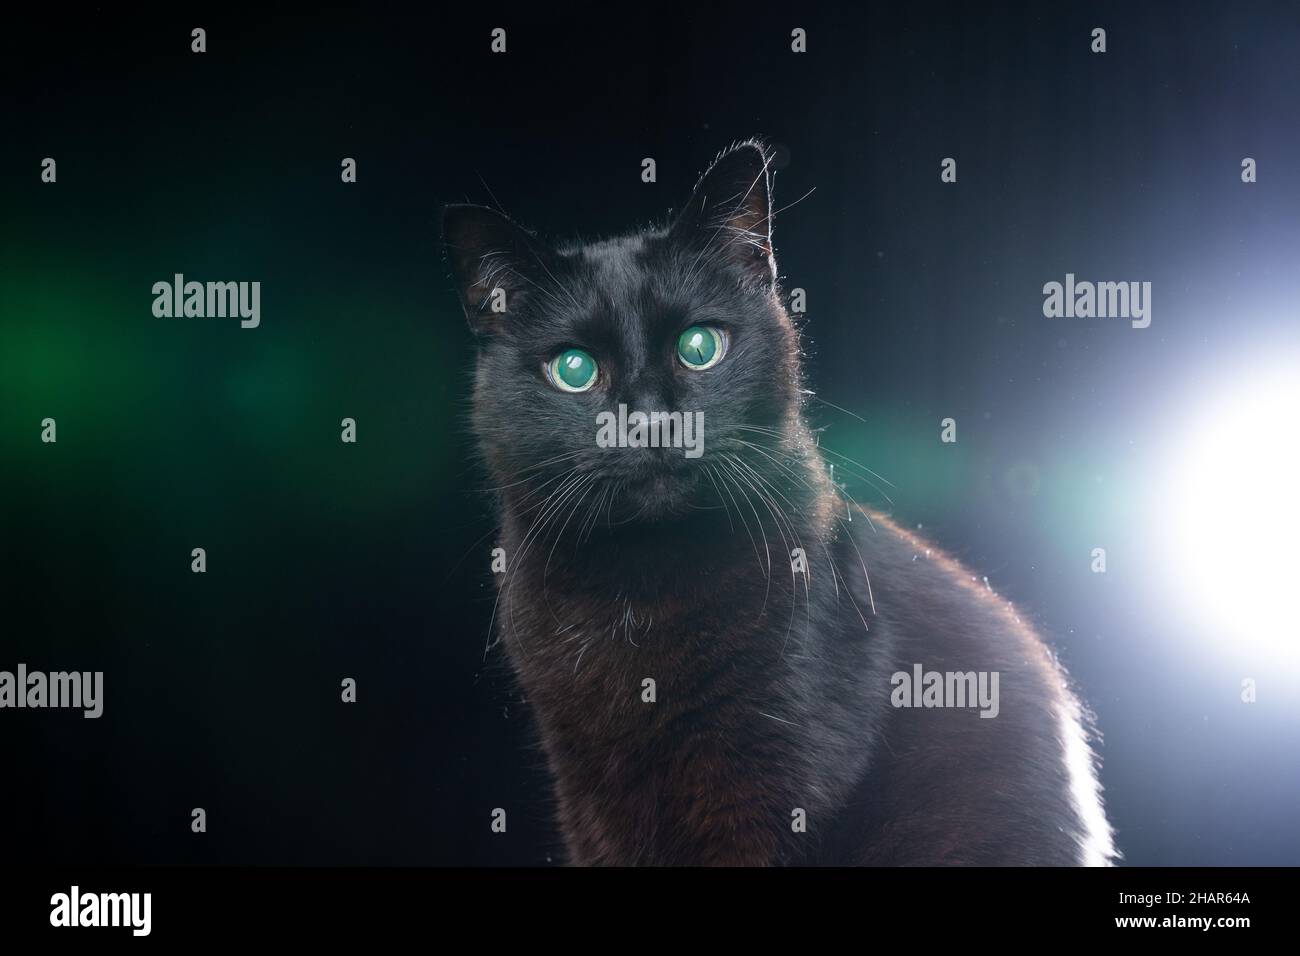 blind black cat portrait with reflecting eye retina on black background with lens flare Stock Photo